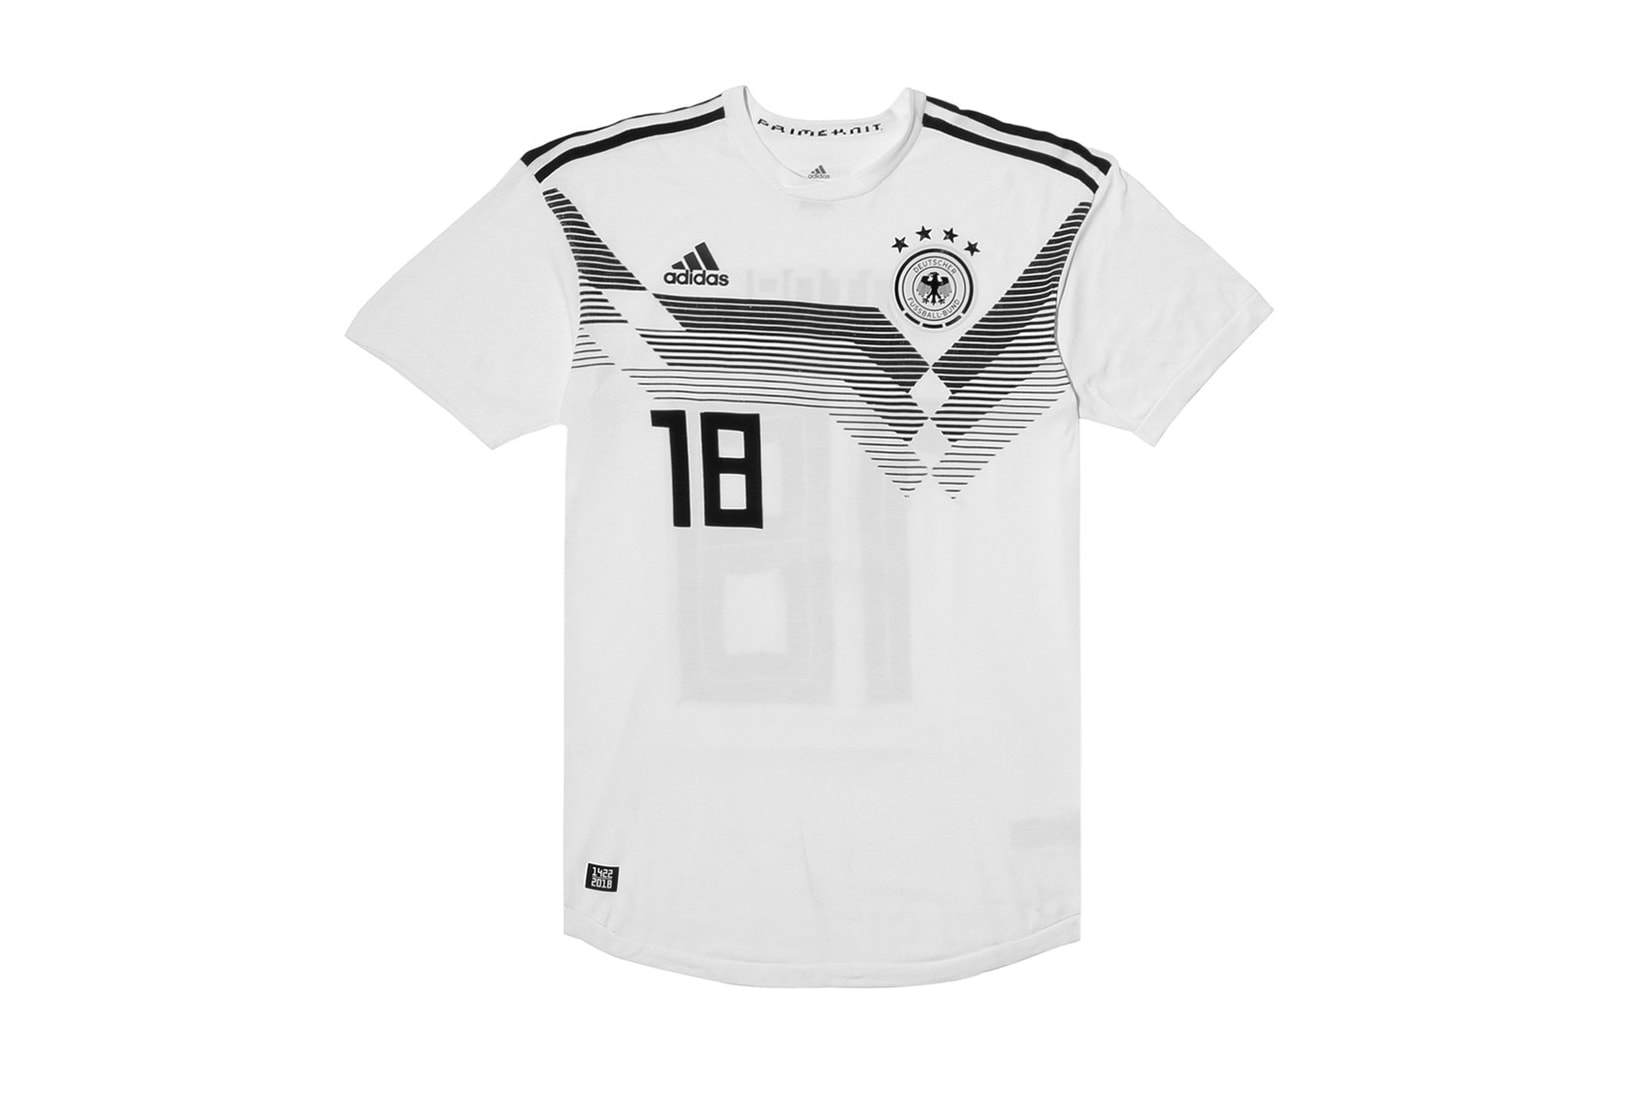 adidas Primeknit Germany World Cup Football Kit